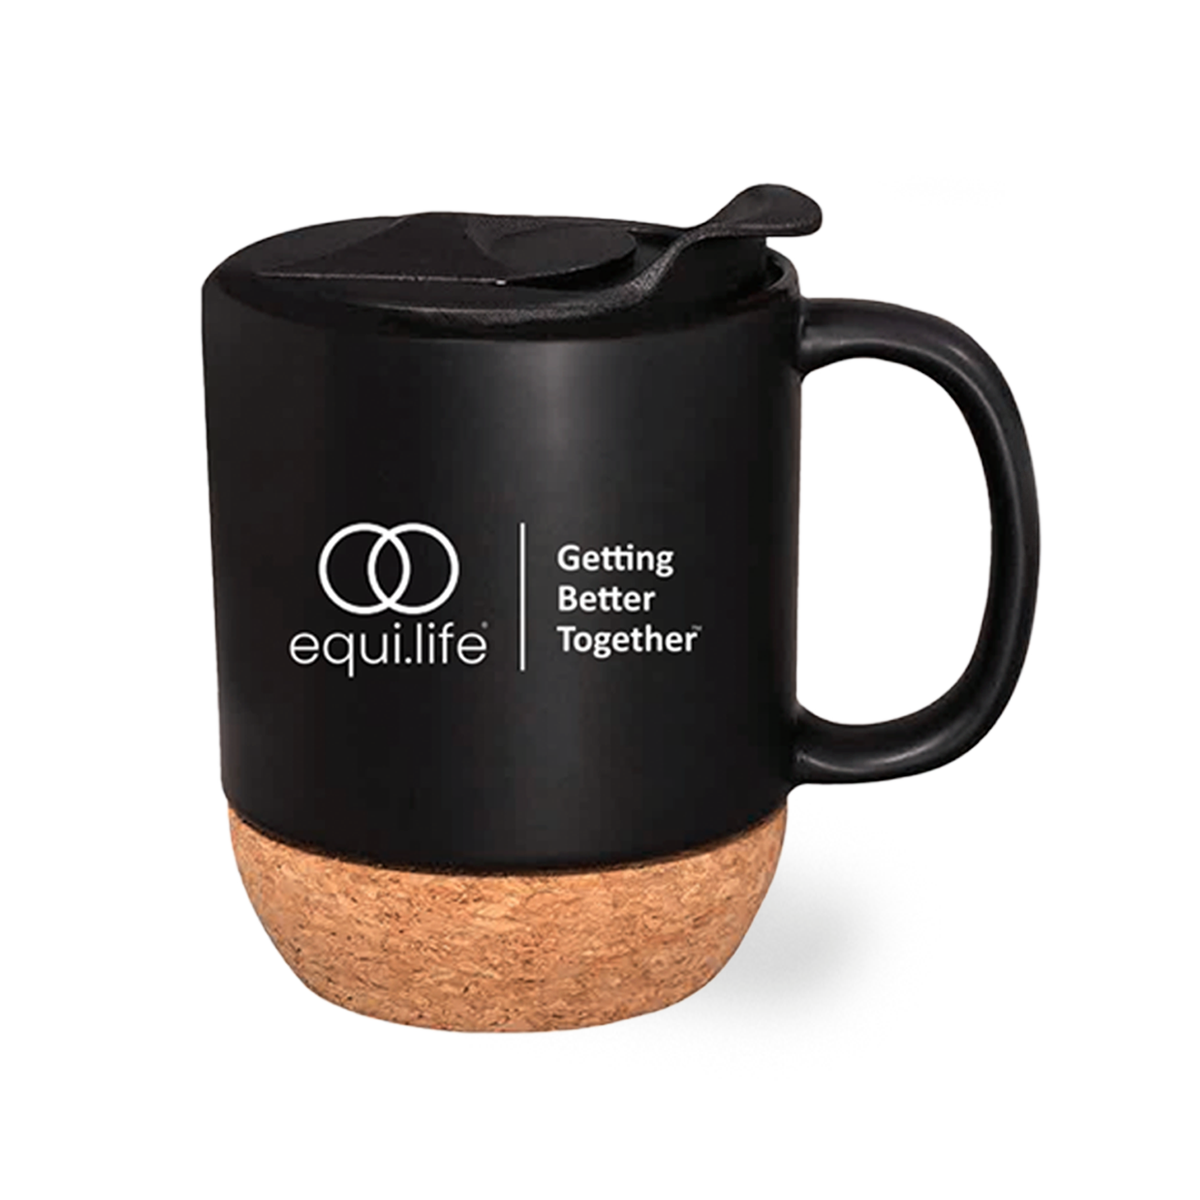 EquiLife Ceramic Mug